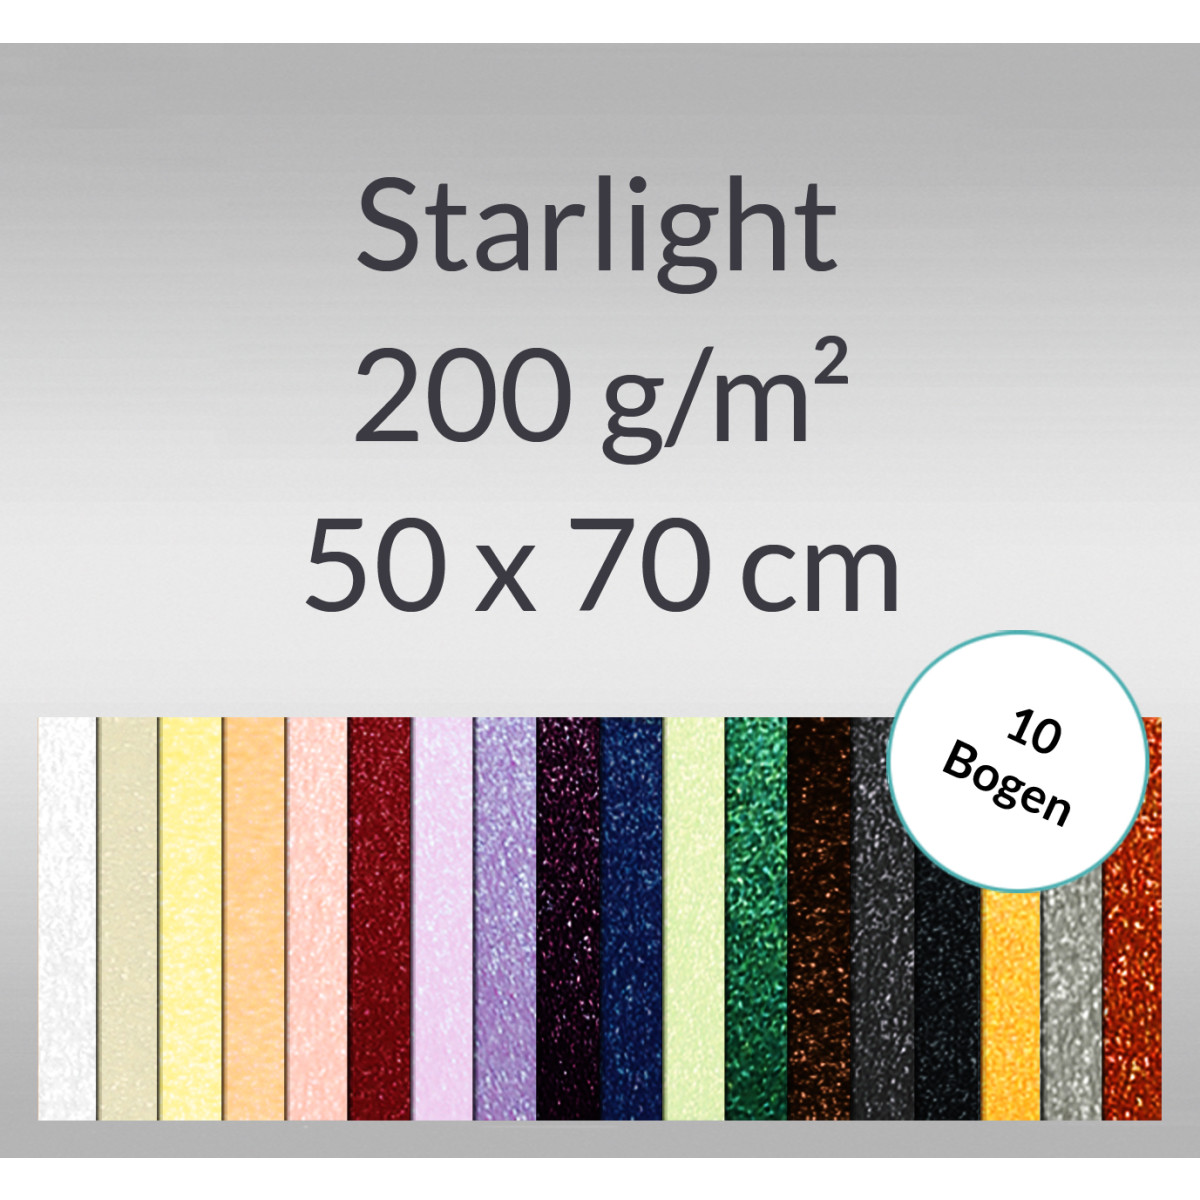 Starlight 200 g/qm 50 x 70 cm - 10 Bogen